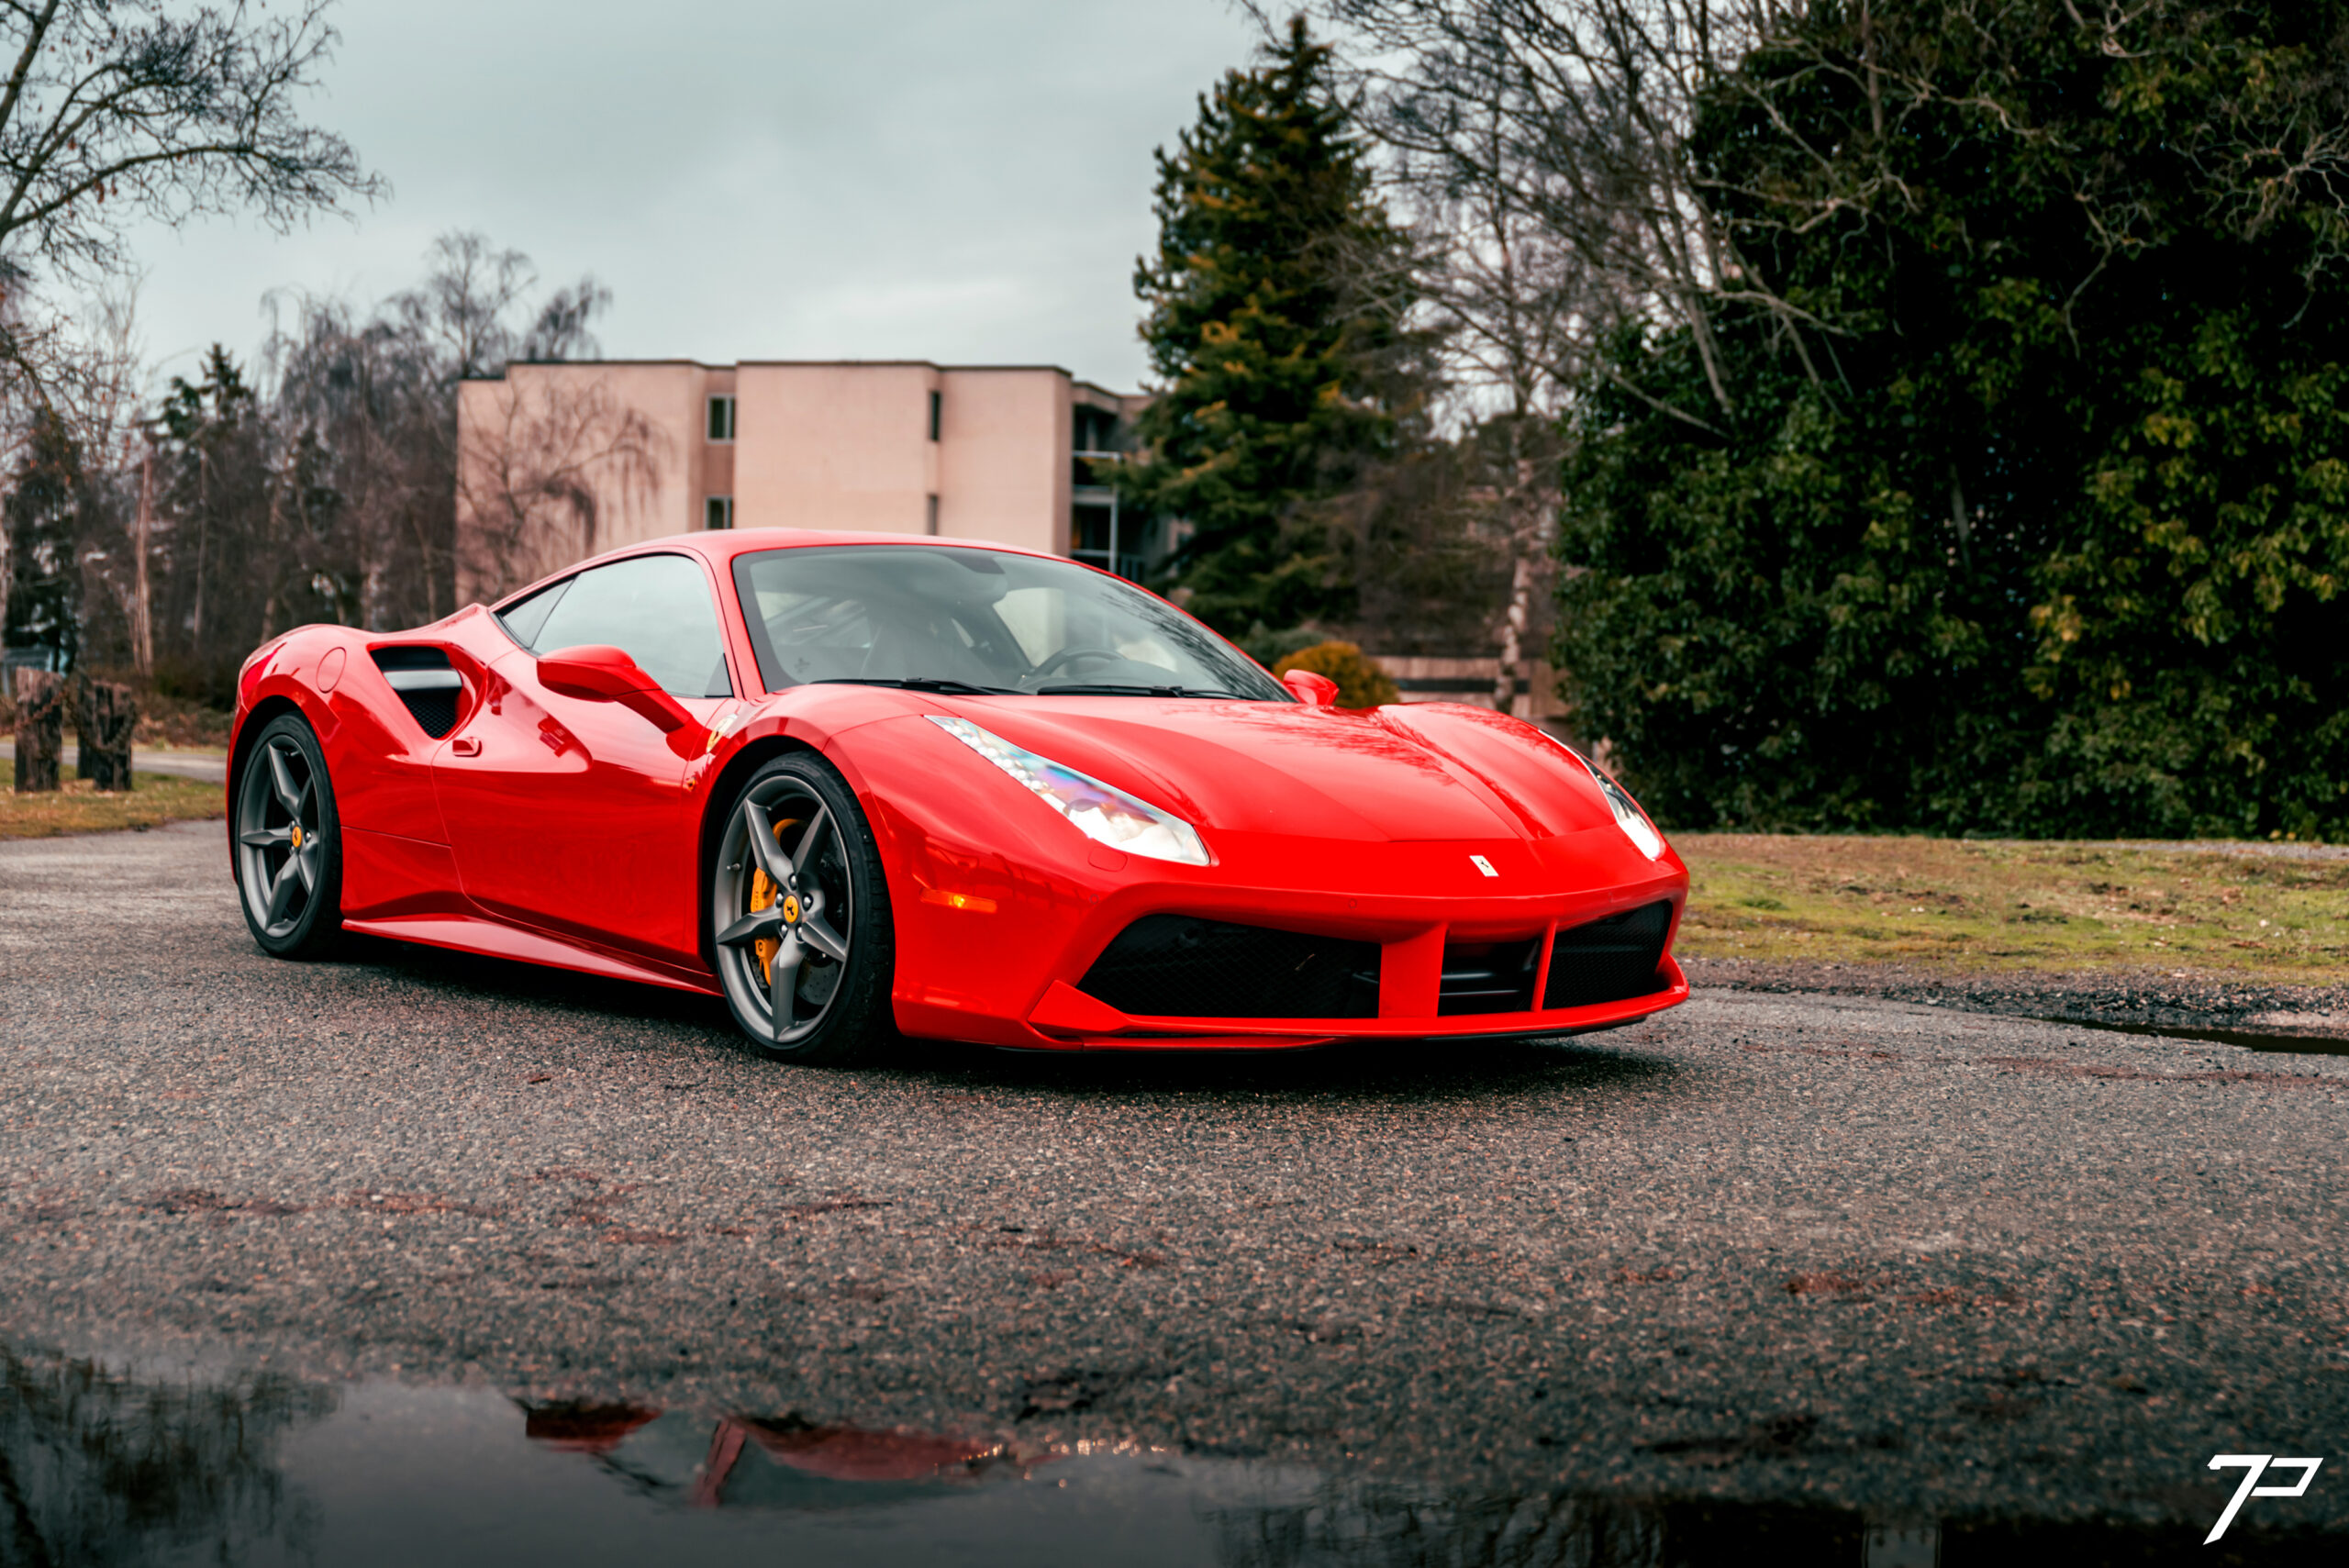 The Ferrari V8: A New Age